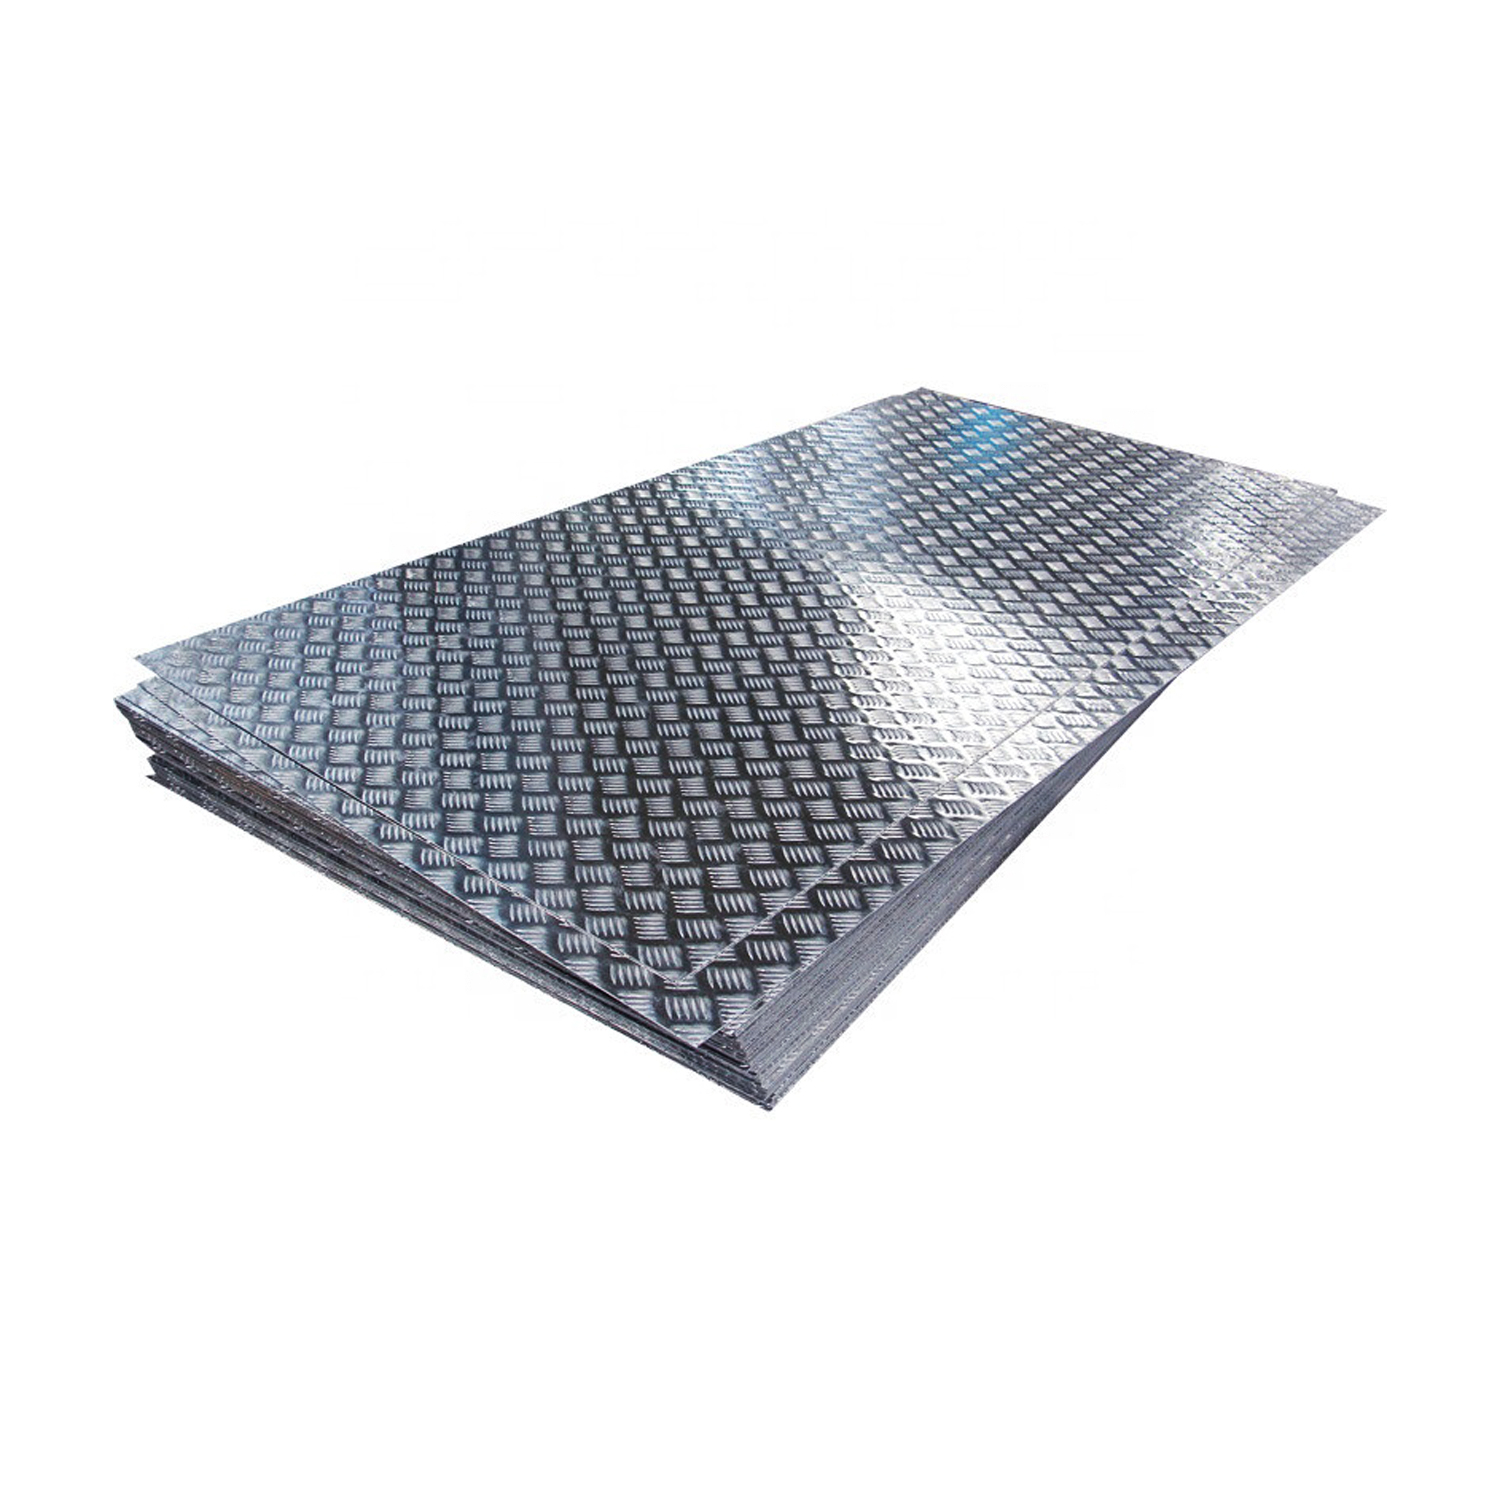 A36 Q235B SS400 Quality Assurance Carbon Galvanized Checkered Steel Plate/Galvanized Diamond Steel Plate 